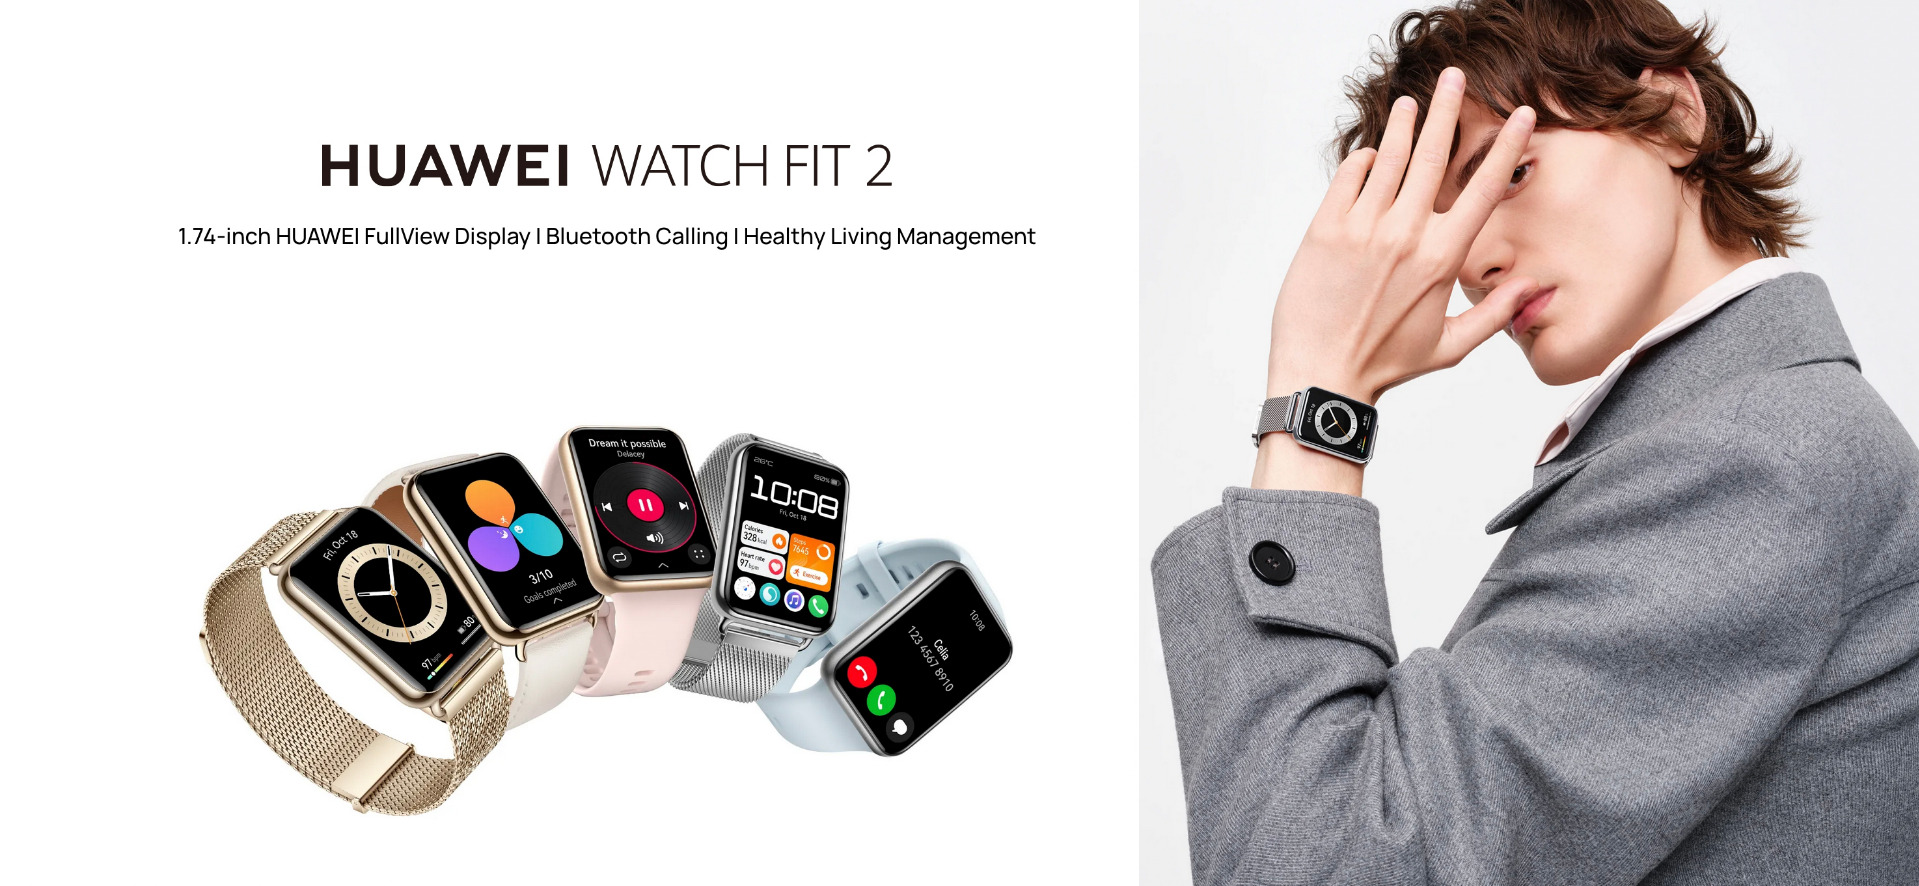 Huawei watch fit инструкция. Huawei watch Fit 2 Сакура. Смарт-часы Huawei Fit 2 Active Edition Midnight Black (yda-b09s) приложение для смартфона. Huawei watch Fit 2 Active Edition браслет. Huawei умные часы watch Fit 2 Activ Sakura или голубые.